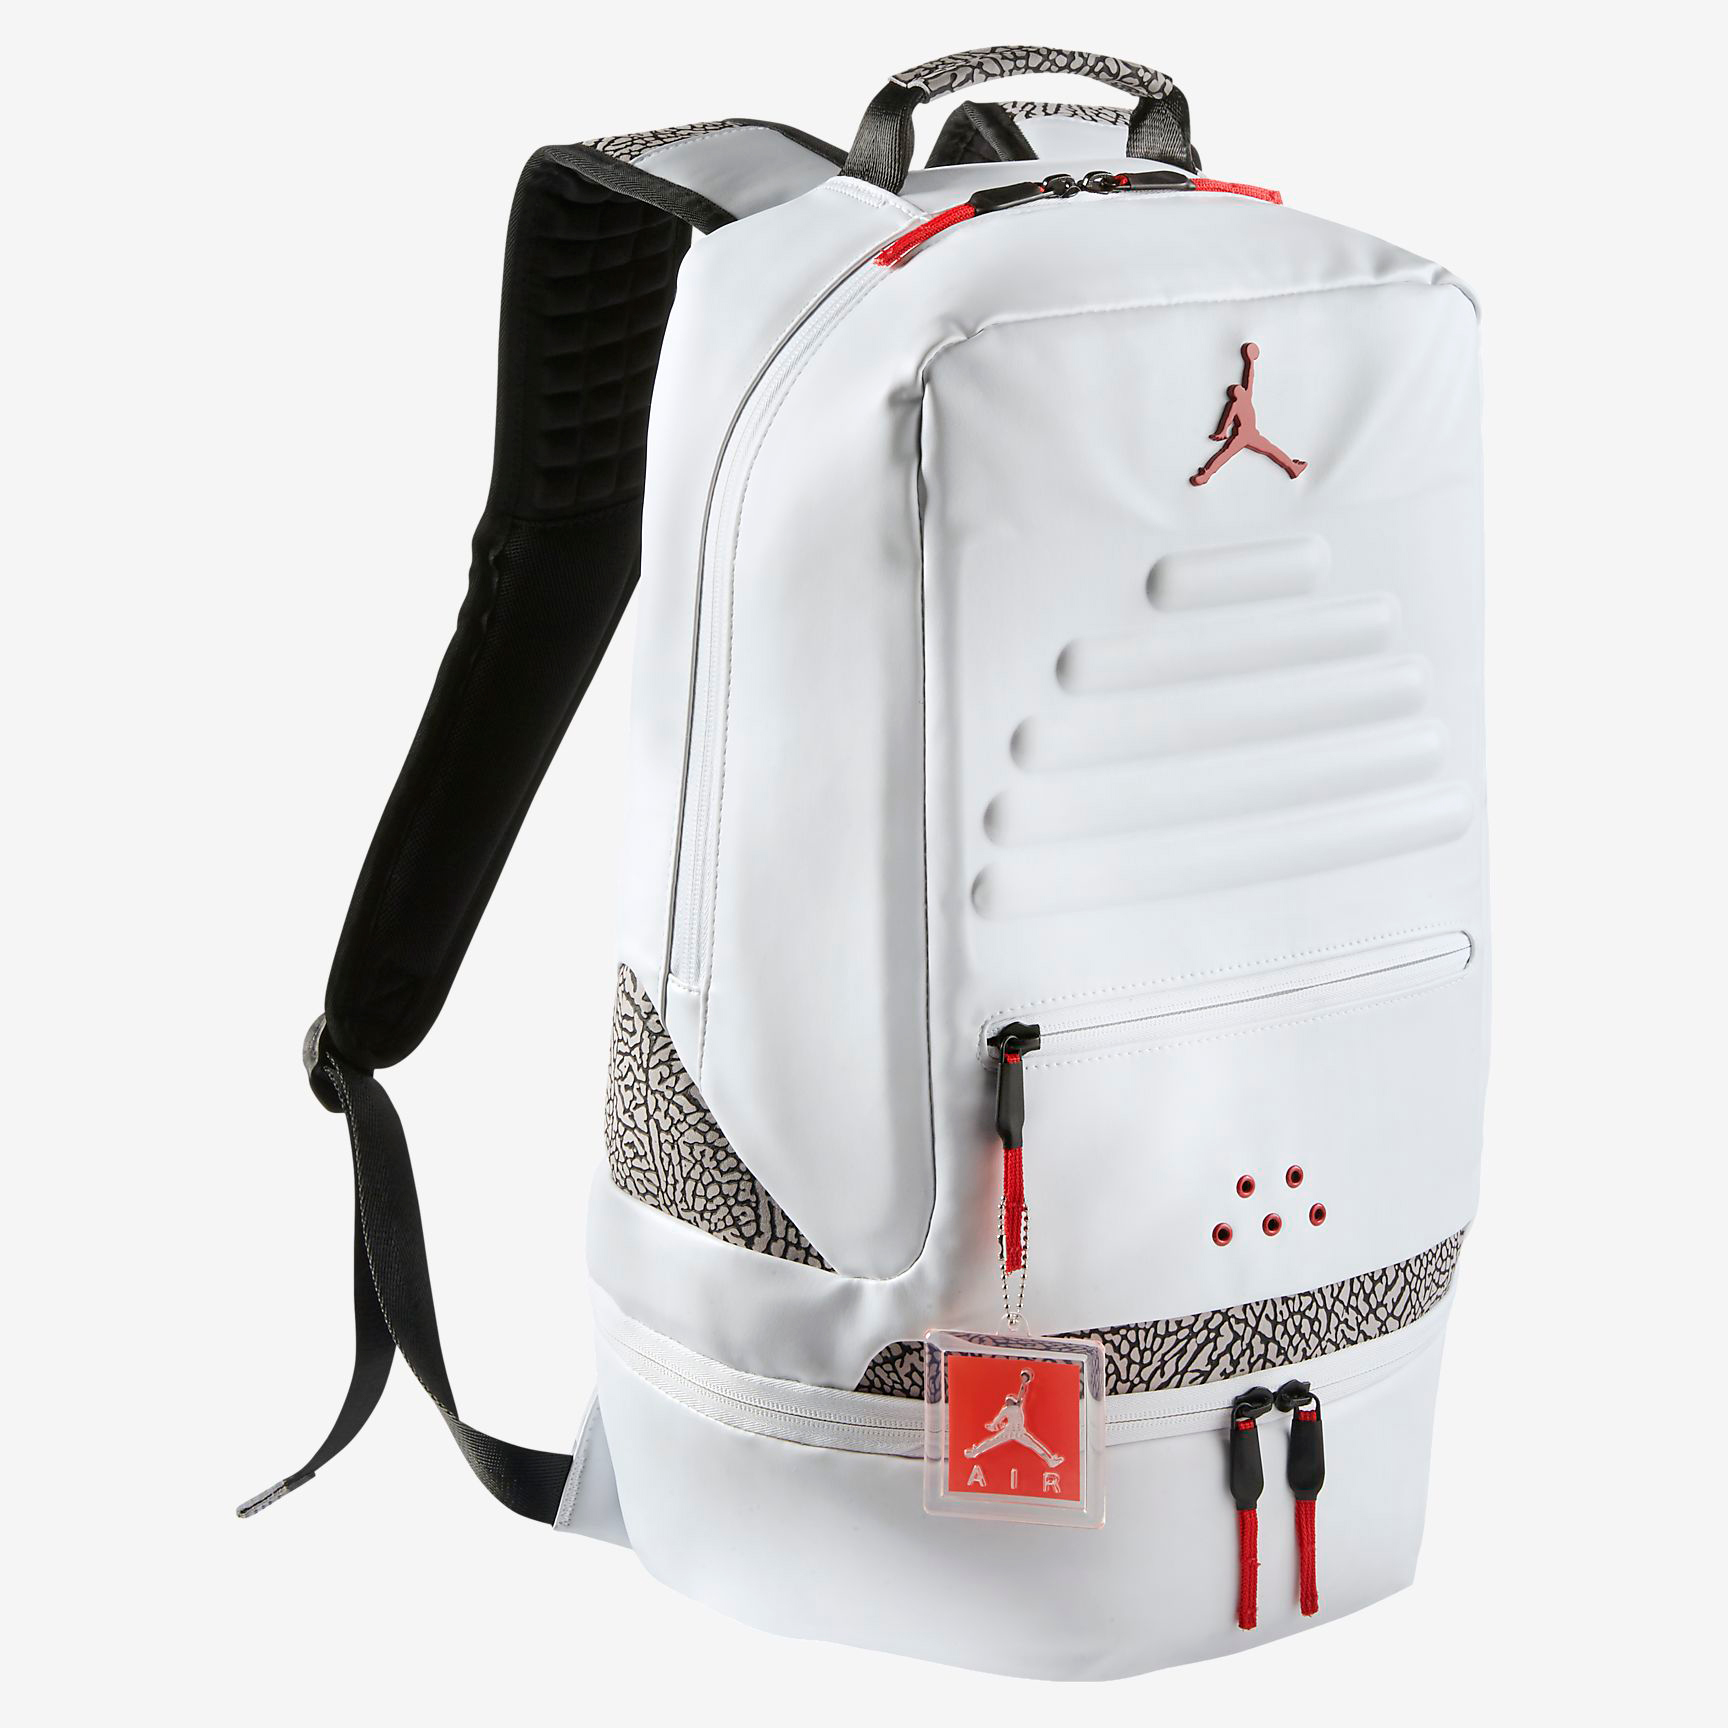 michael jordan backpacks for sale